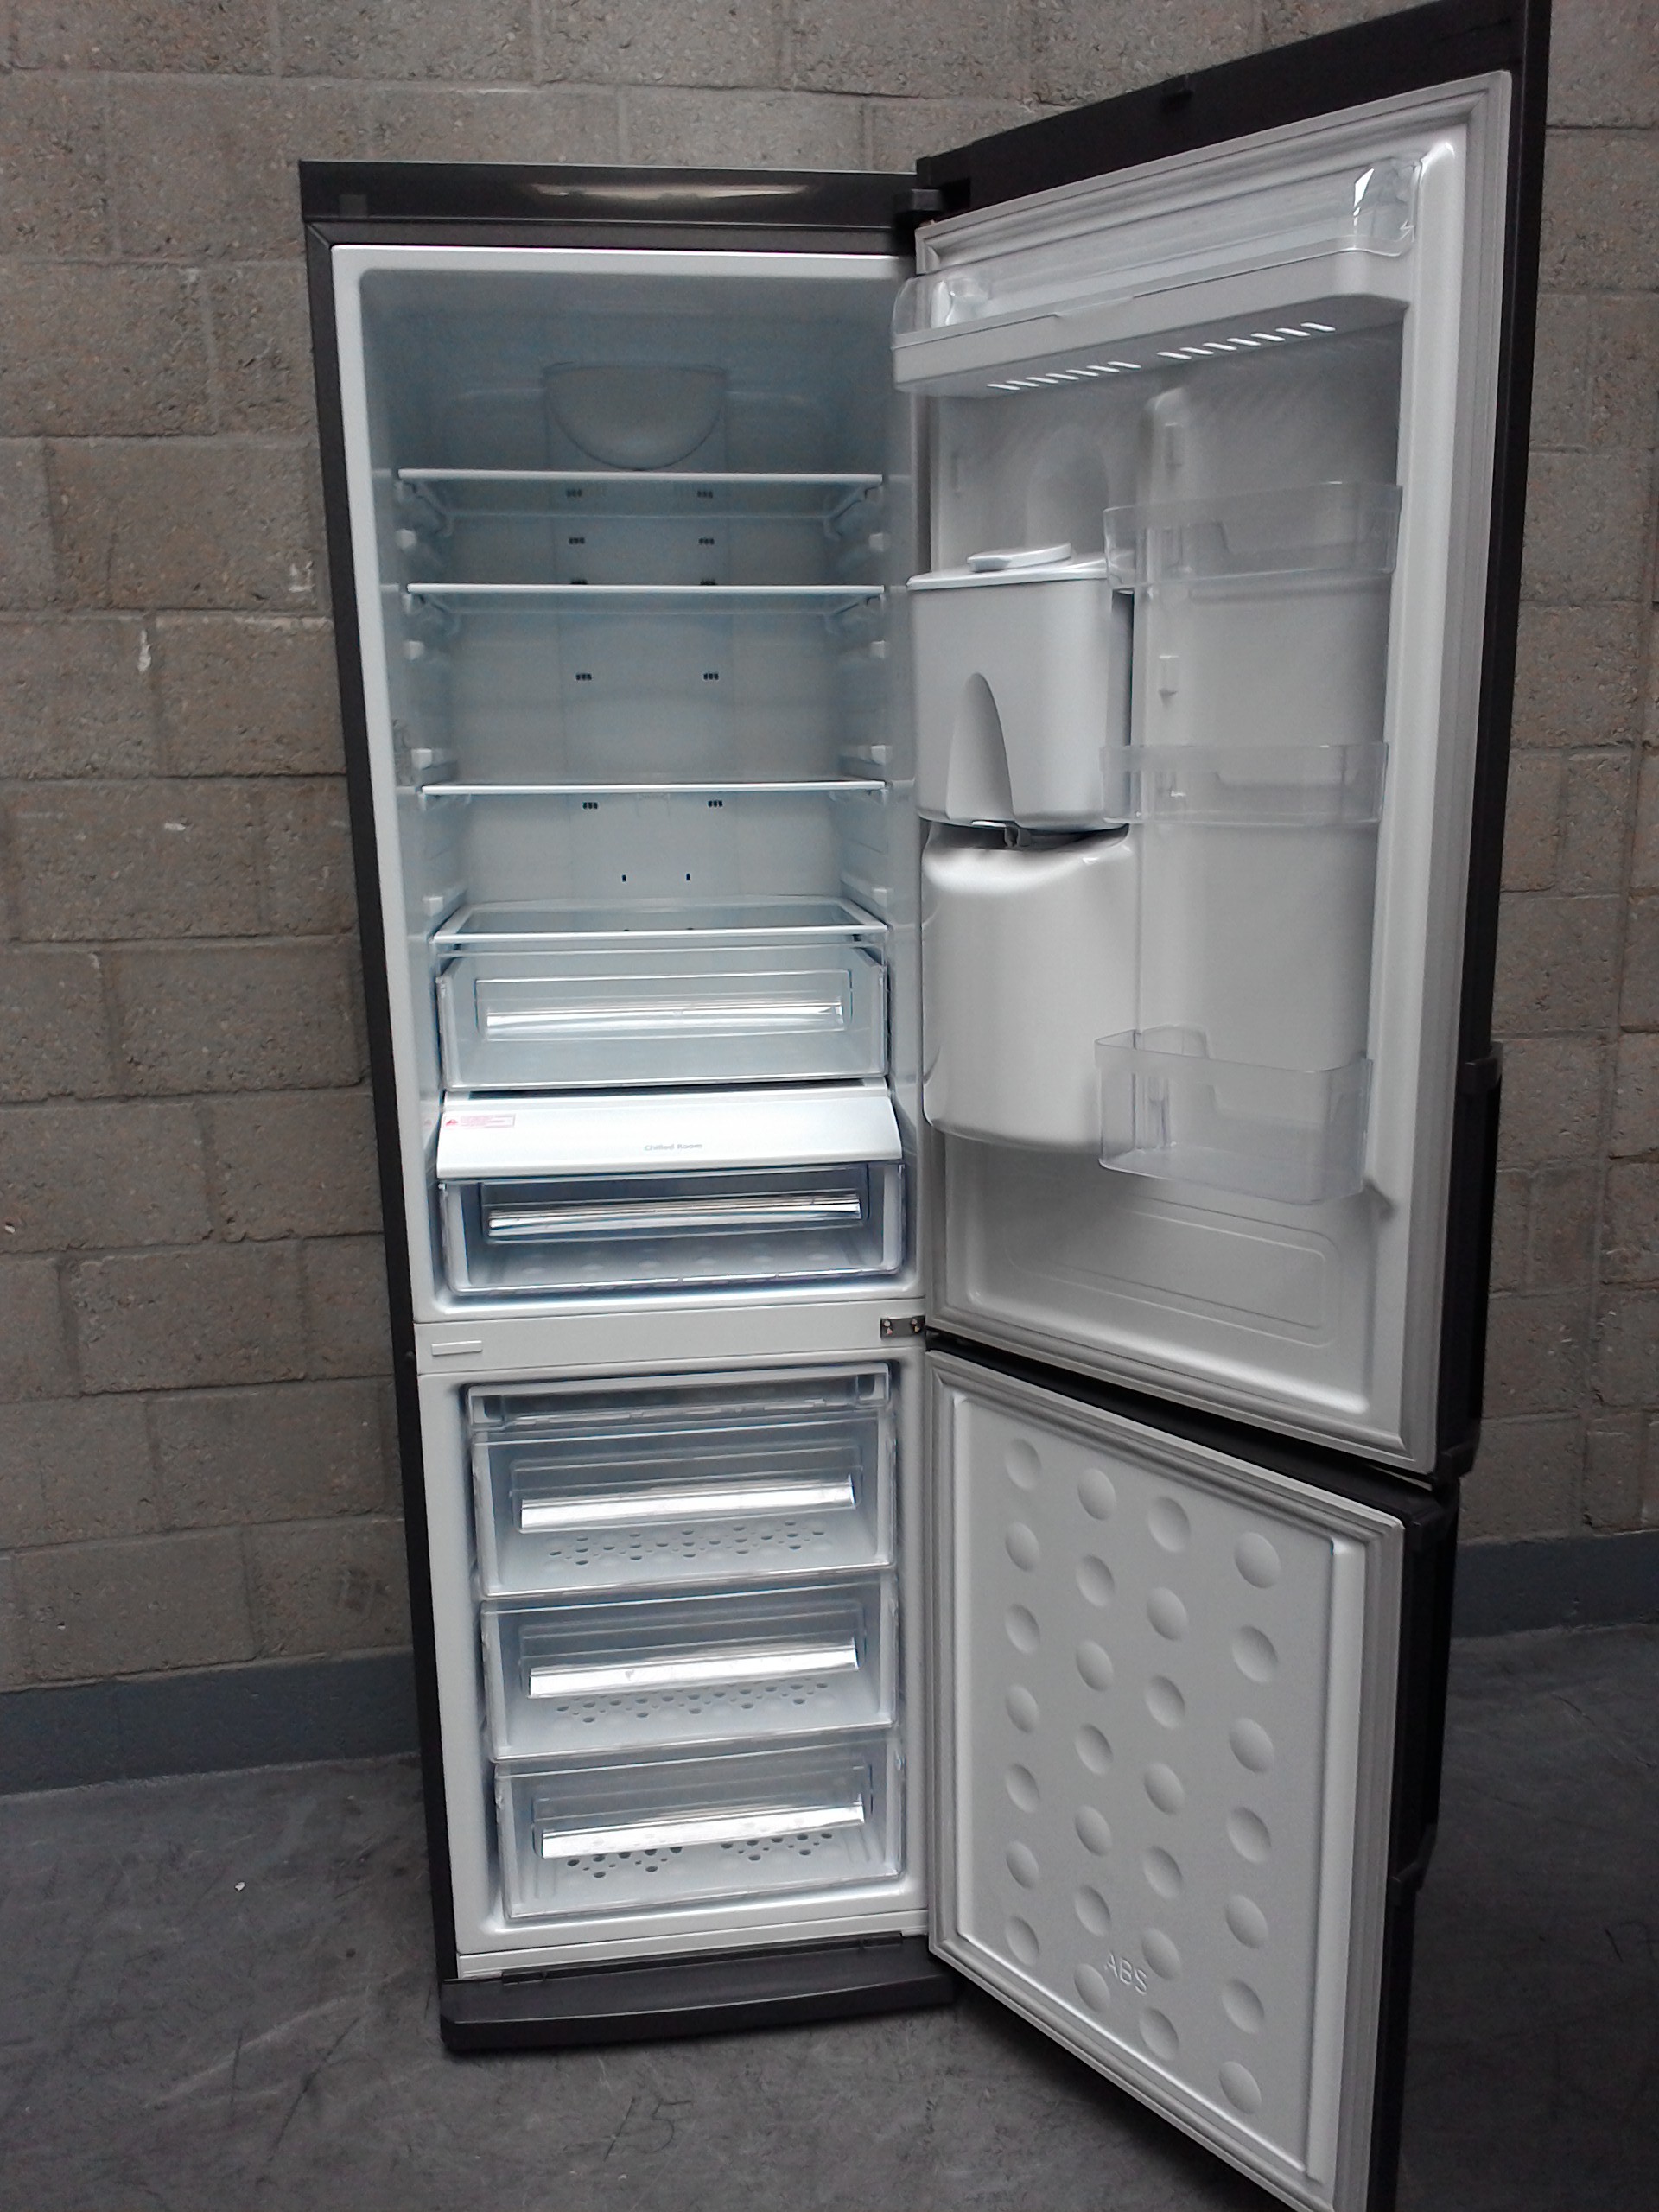 Refrigerator selection